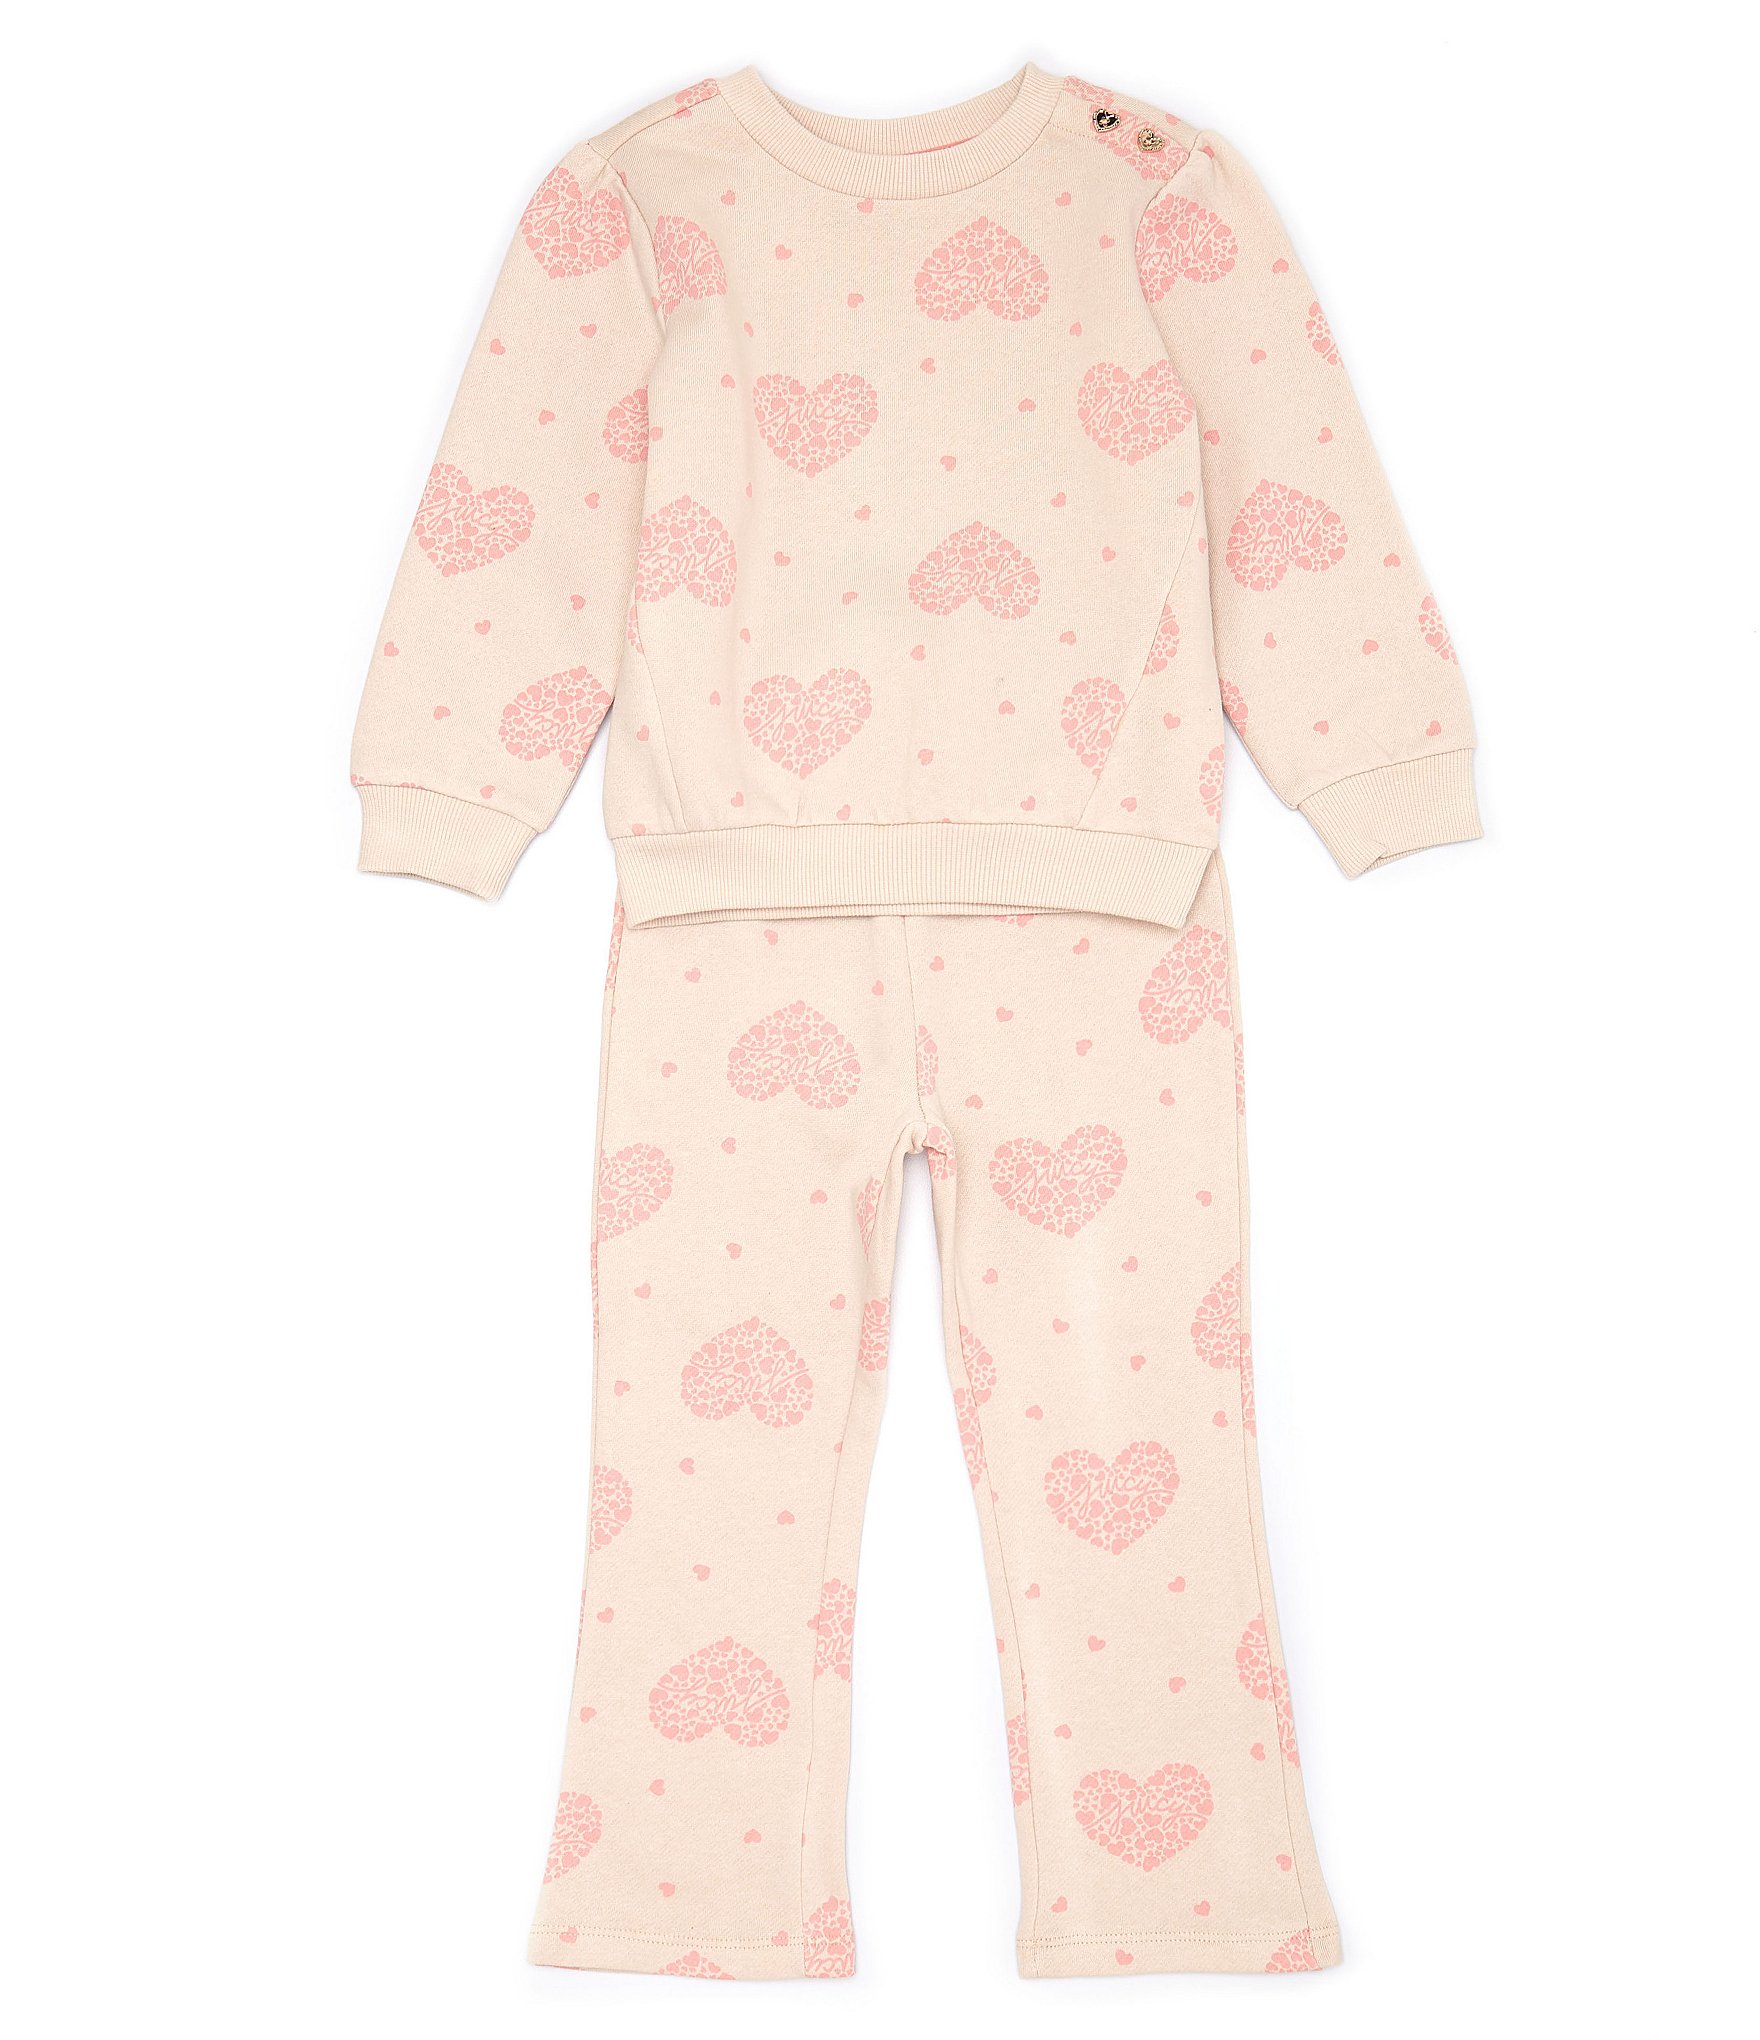 Juicy Couture Little Girls 2T-6X Long Sleeve Heart Printed Fleece ...